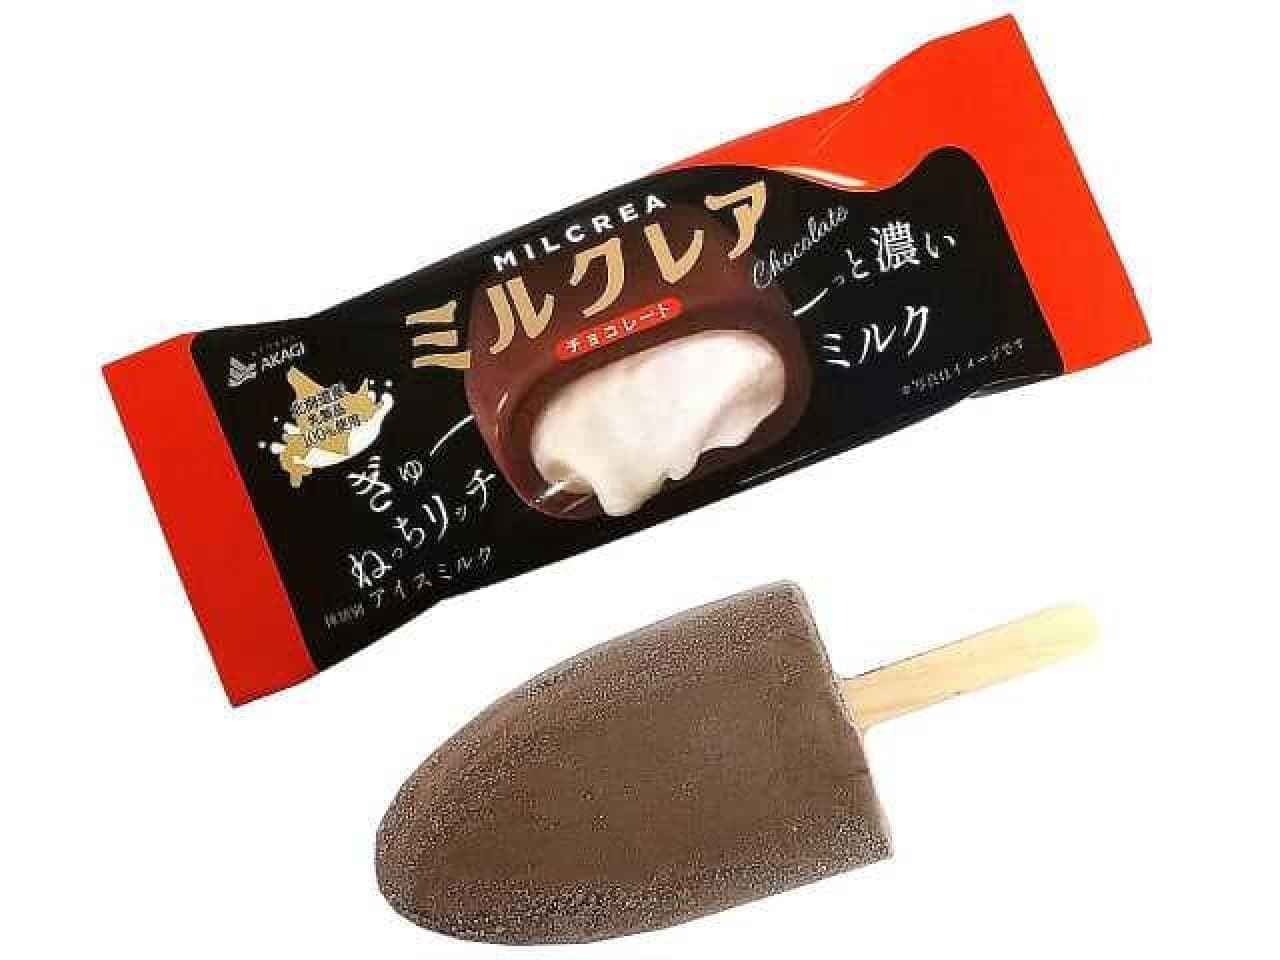 7-ELEVEN "Akagi Milleclairs Chocolate